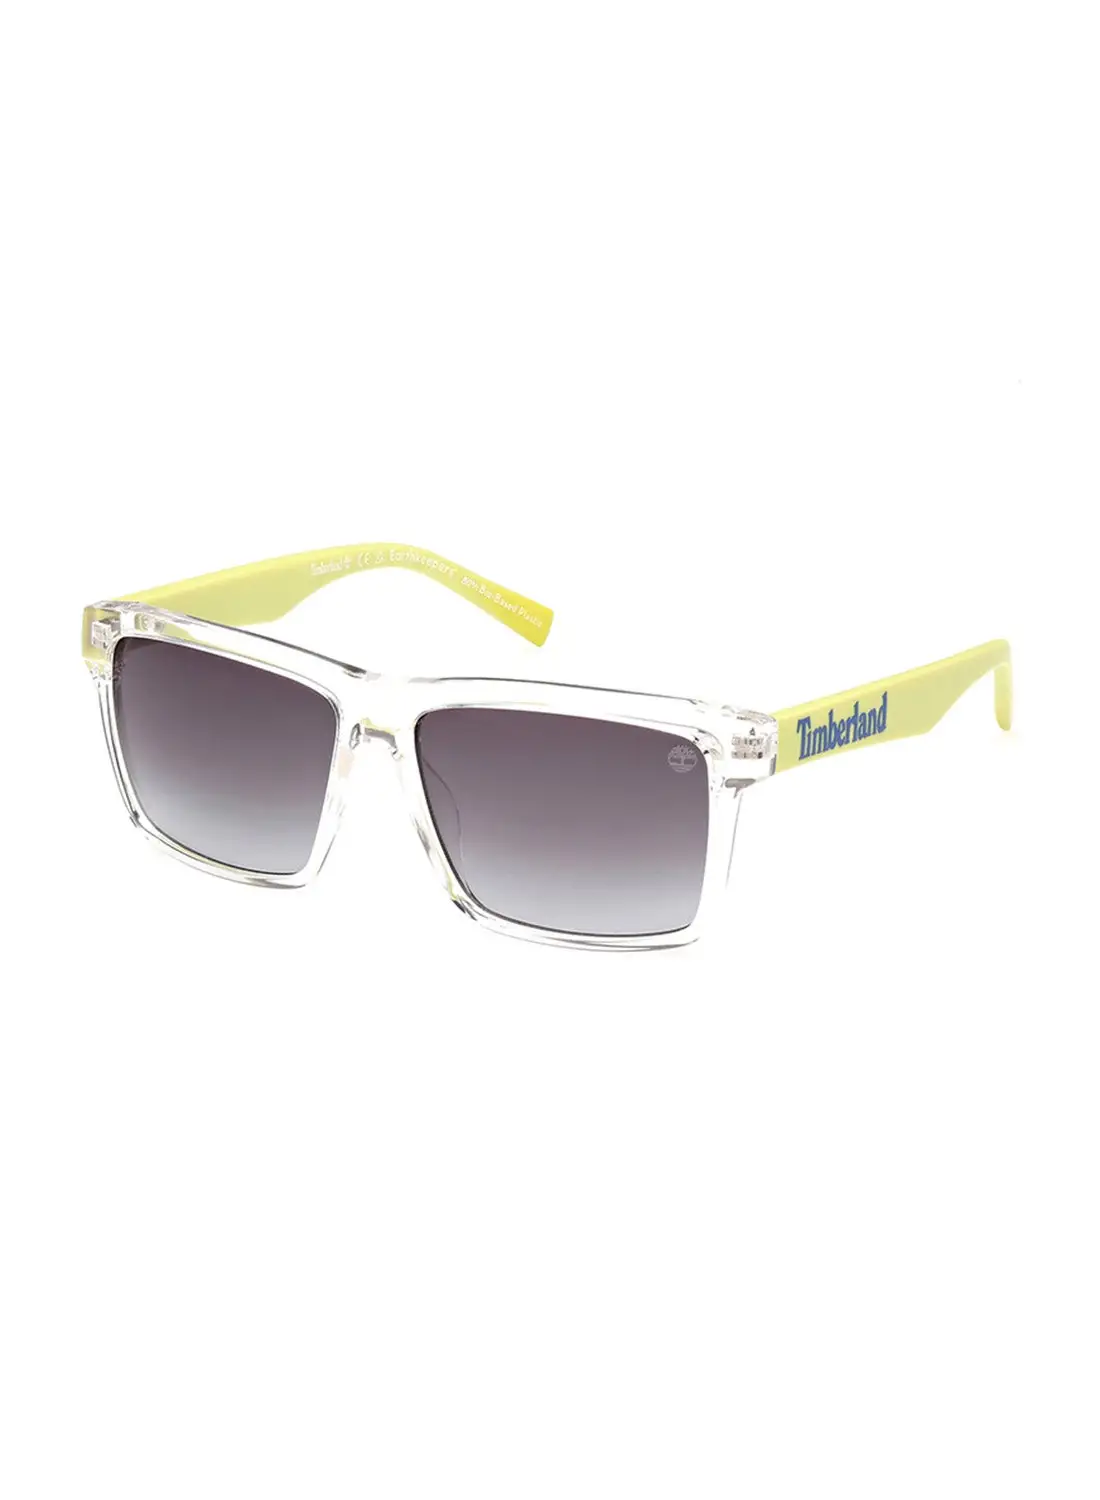 Timberland Unisex UV Protection Square Shape Sunglasses - TB932826B55 - Lens Size: 55 Mm